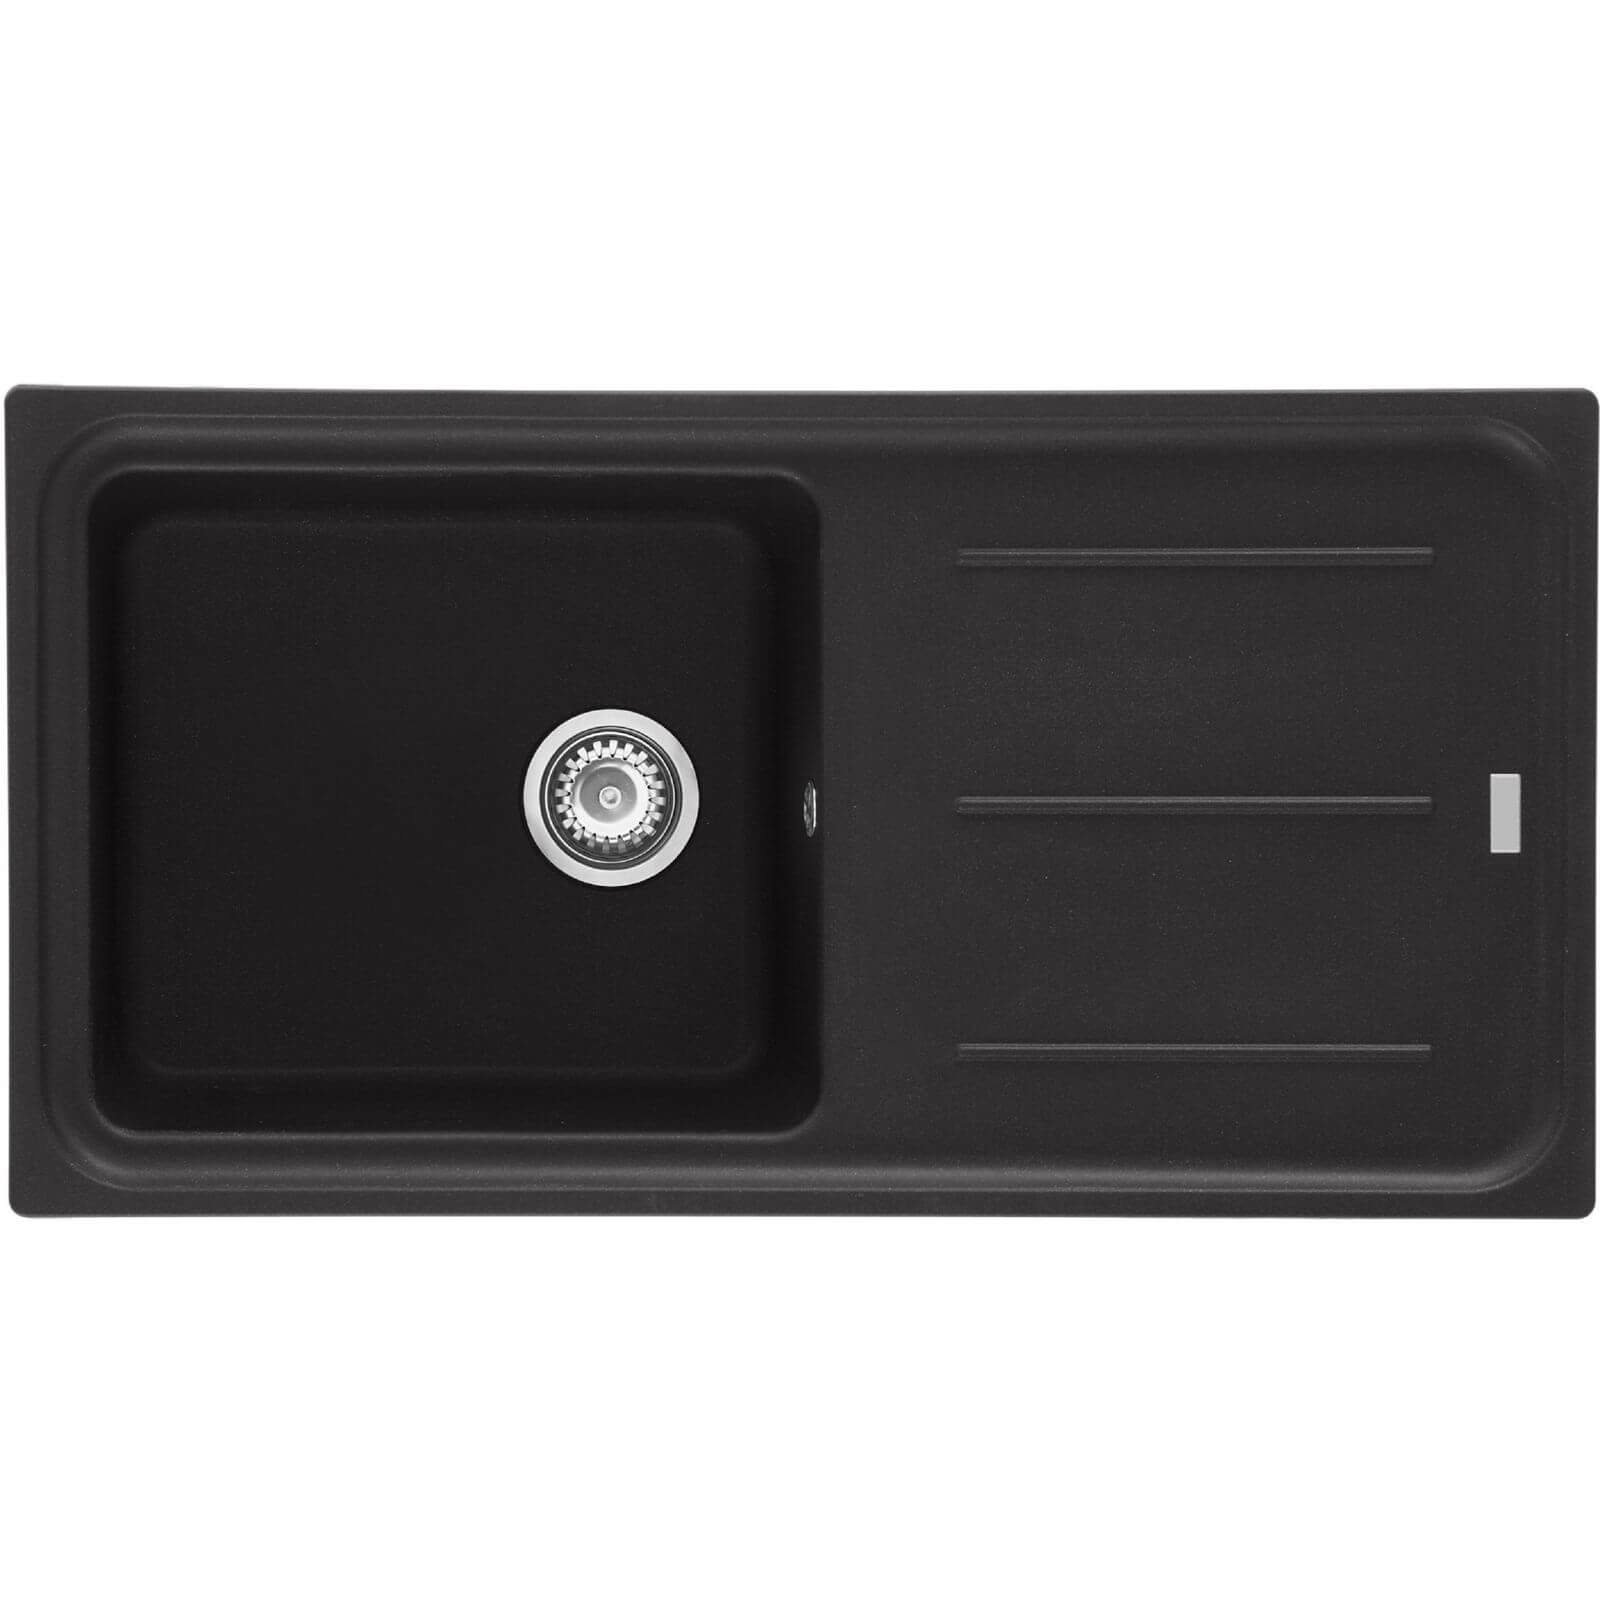 Mondella Premium Black Granite Reversible Kitchen Sink - 1 Bowl